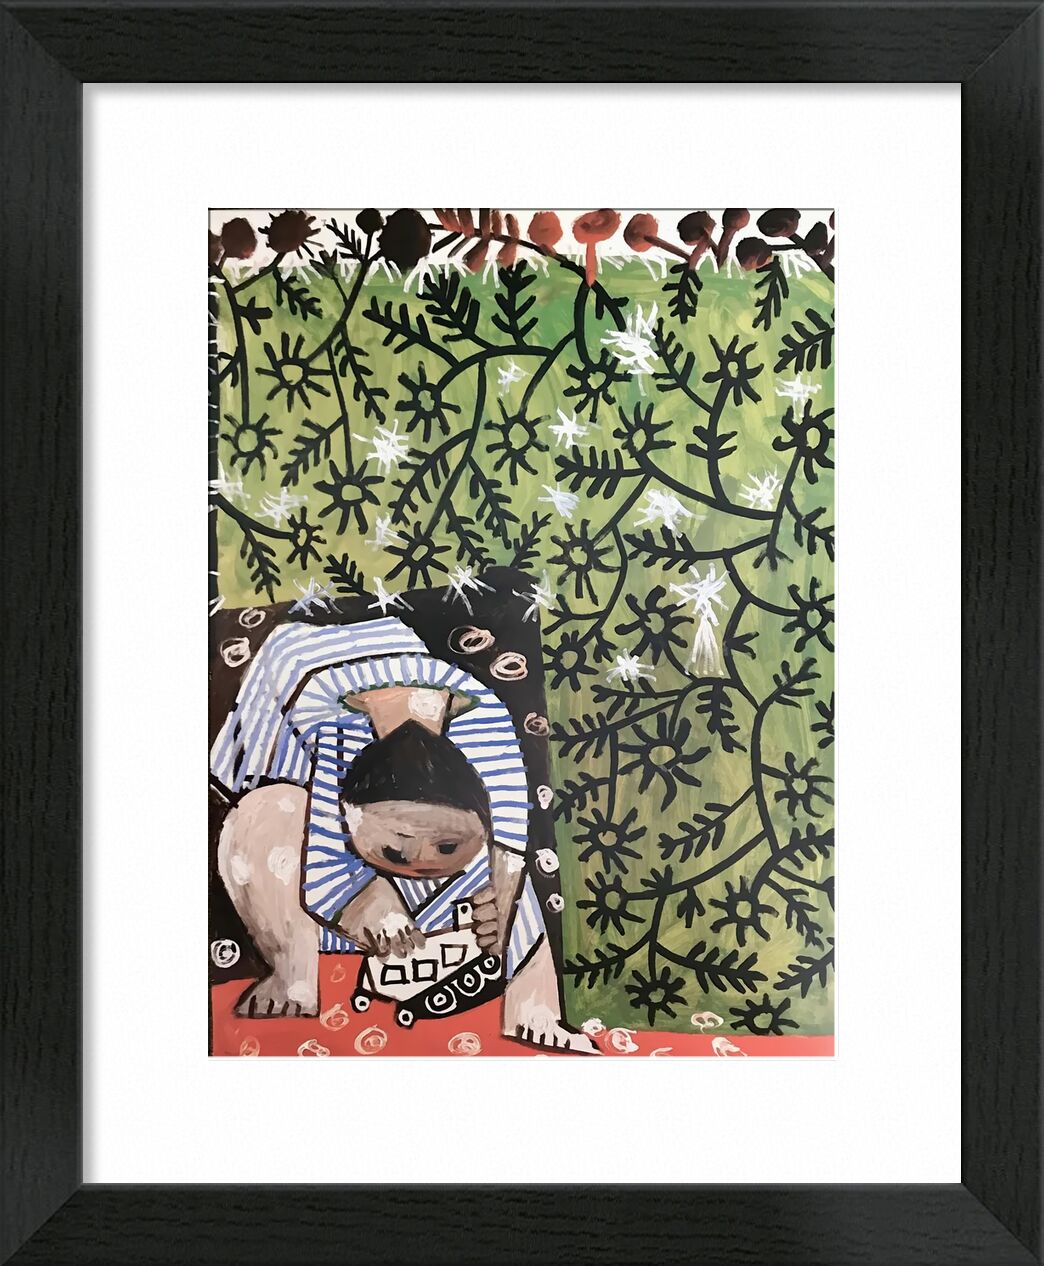 Playing Child - Picasso desde Bellas artes, Prodi Art, abstracto, niño, pintura, picasso